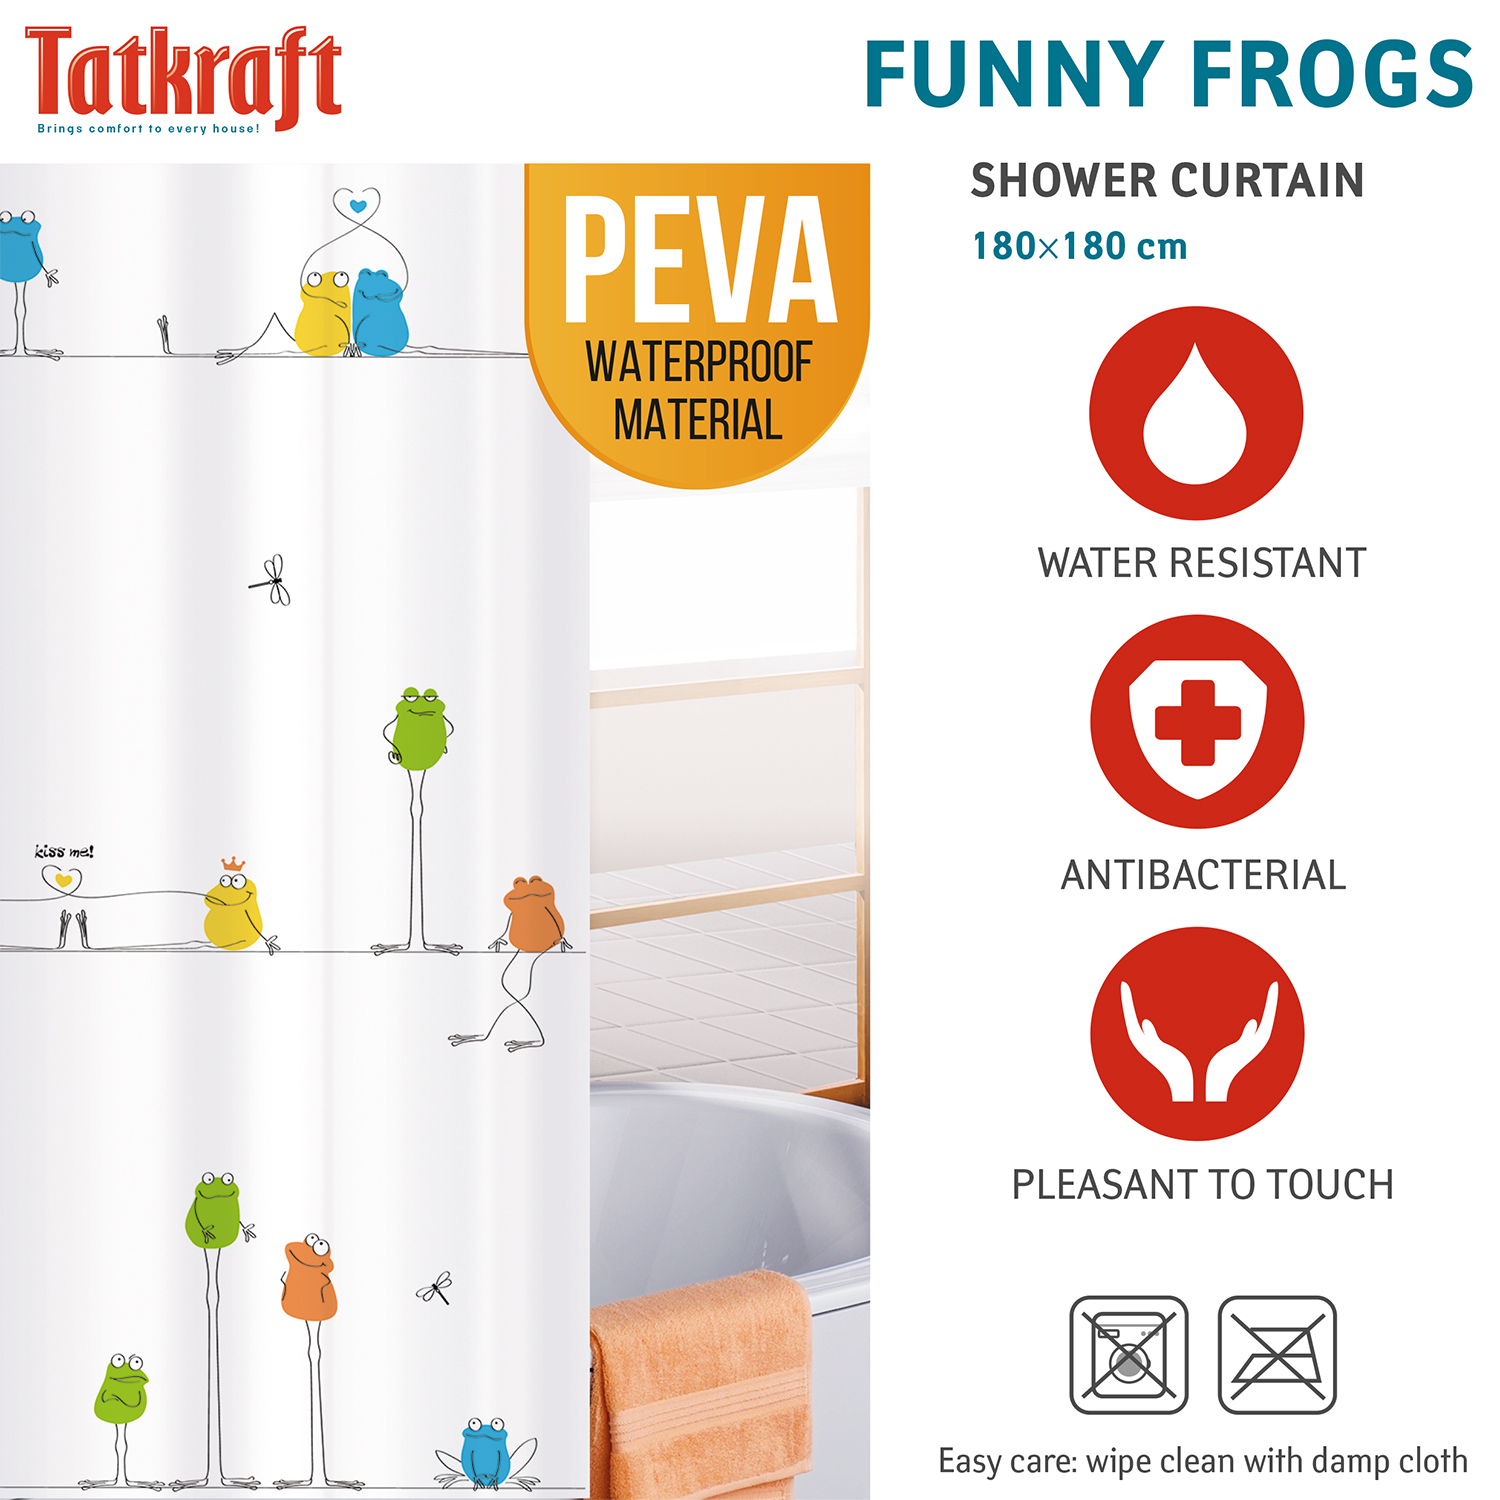 Tatkraft Funny Frogs Fabric Shower Curtain 180X180cm Waterproof Mildew Free w... 